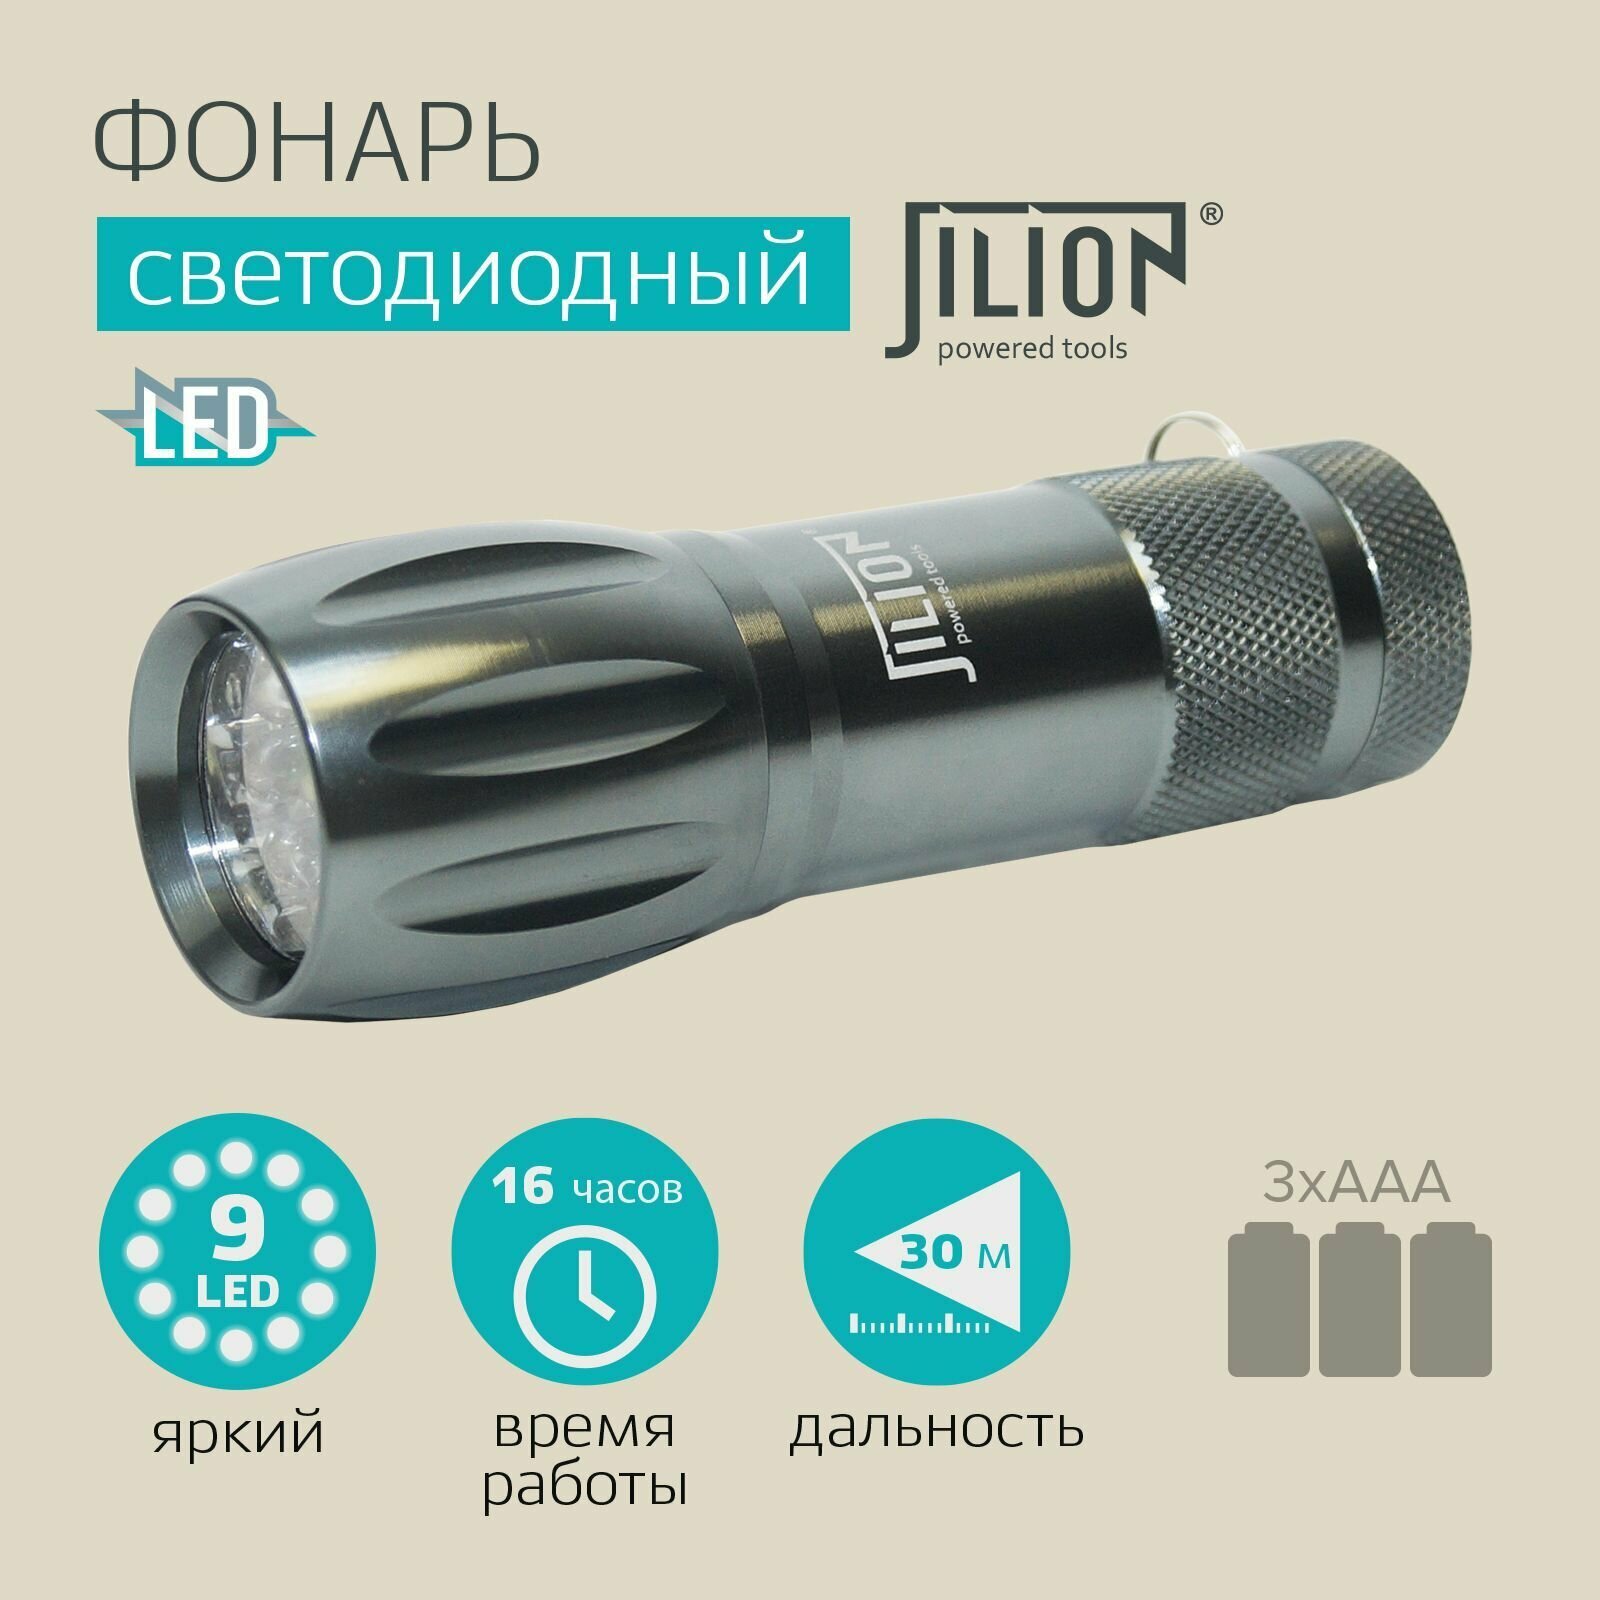 Фонарь ручной светодиодный "Jilion", 9LED, 3хААА, металл